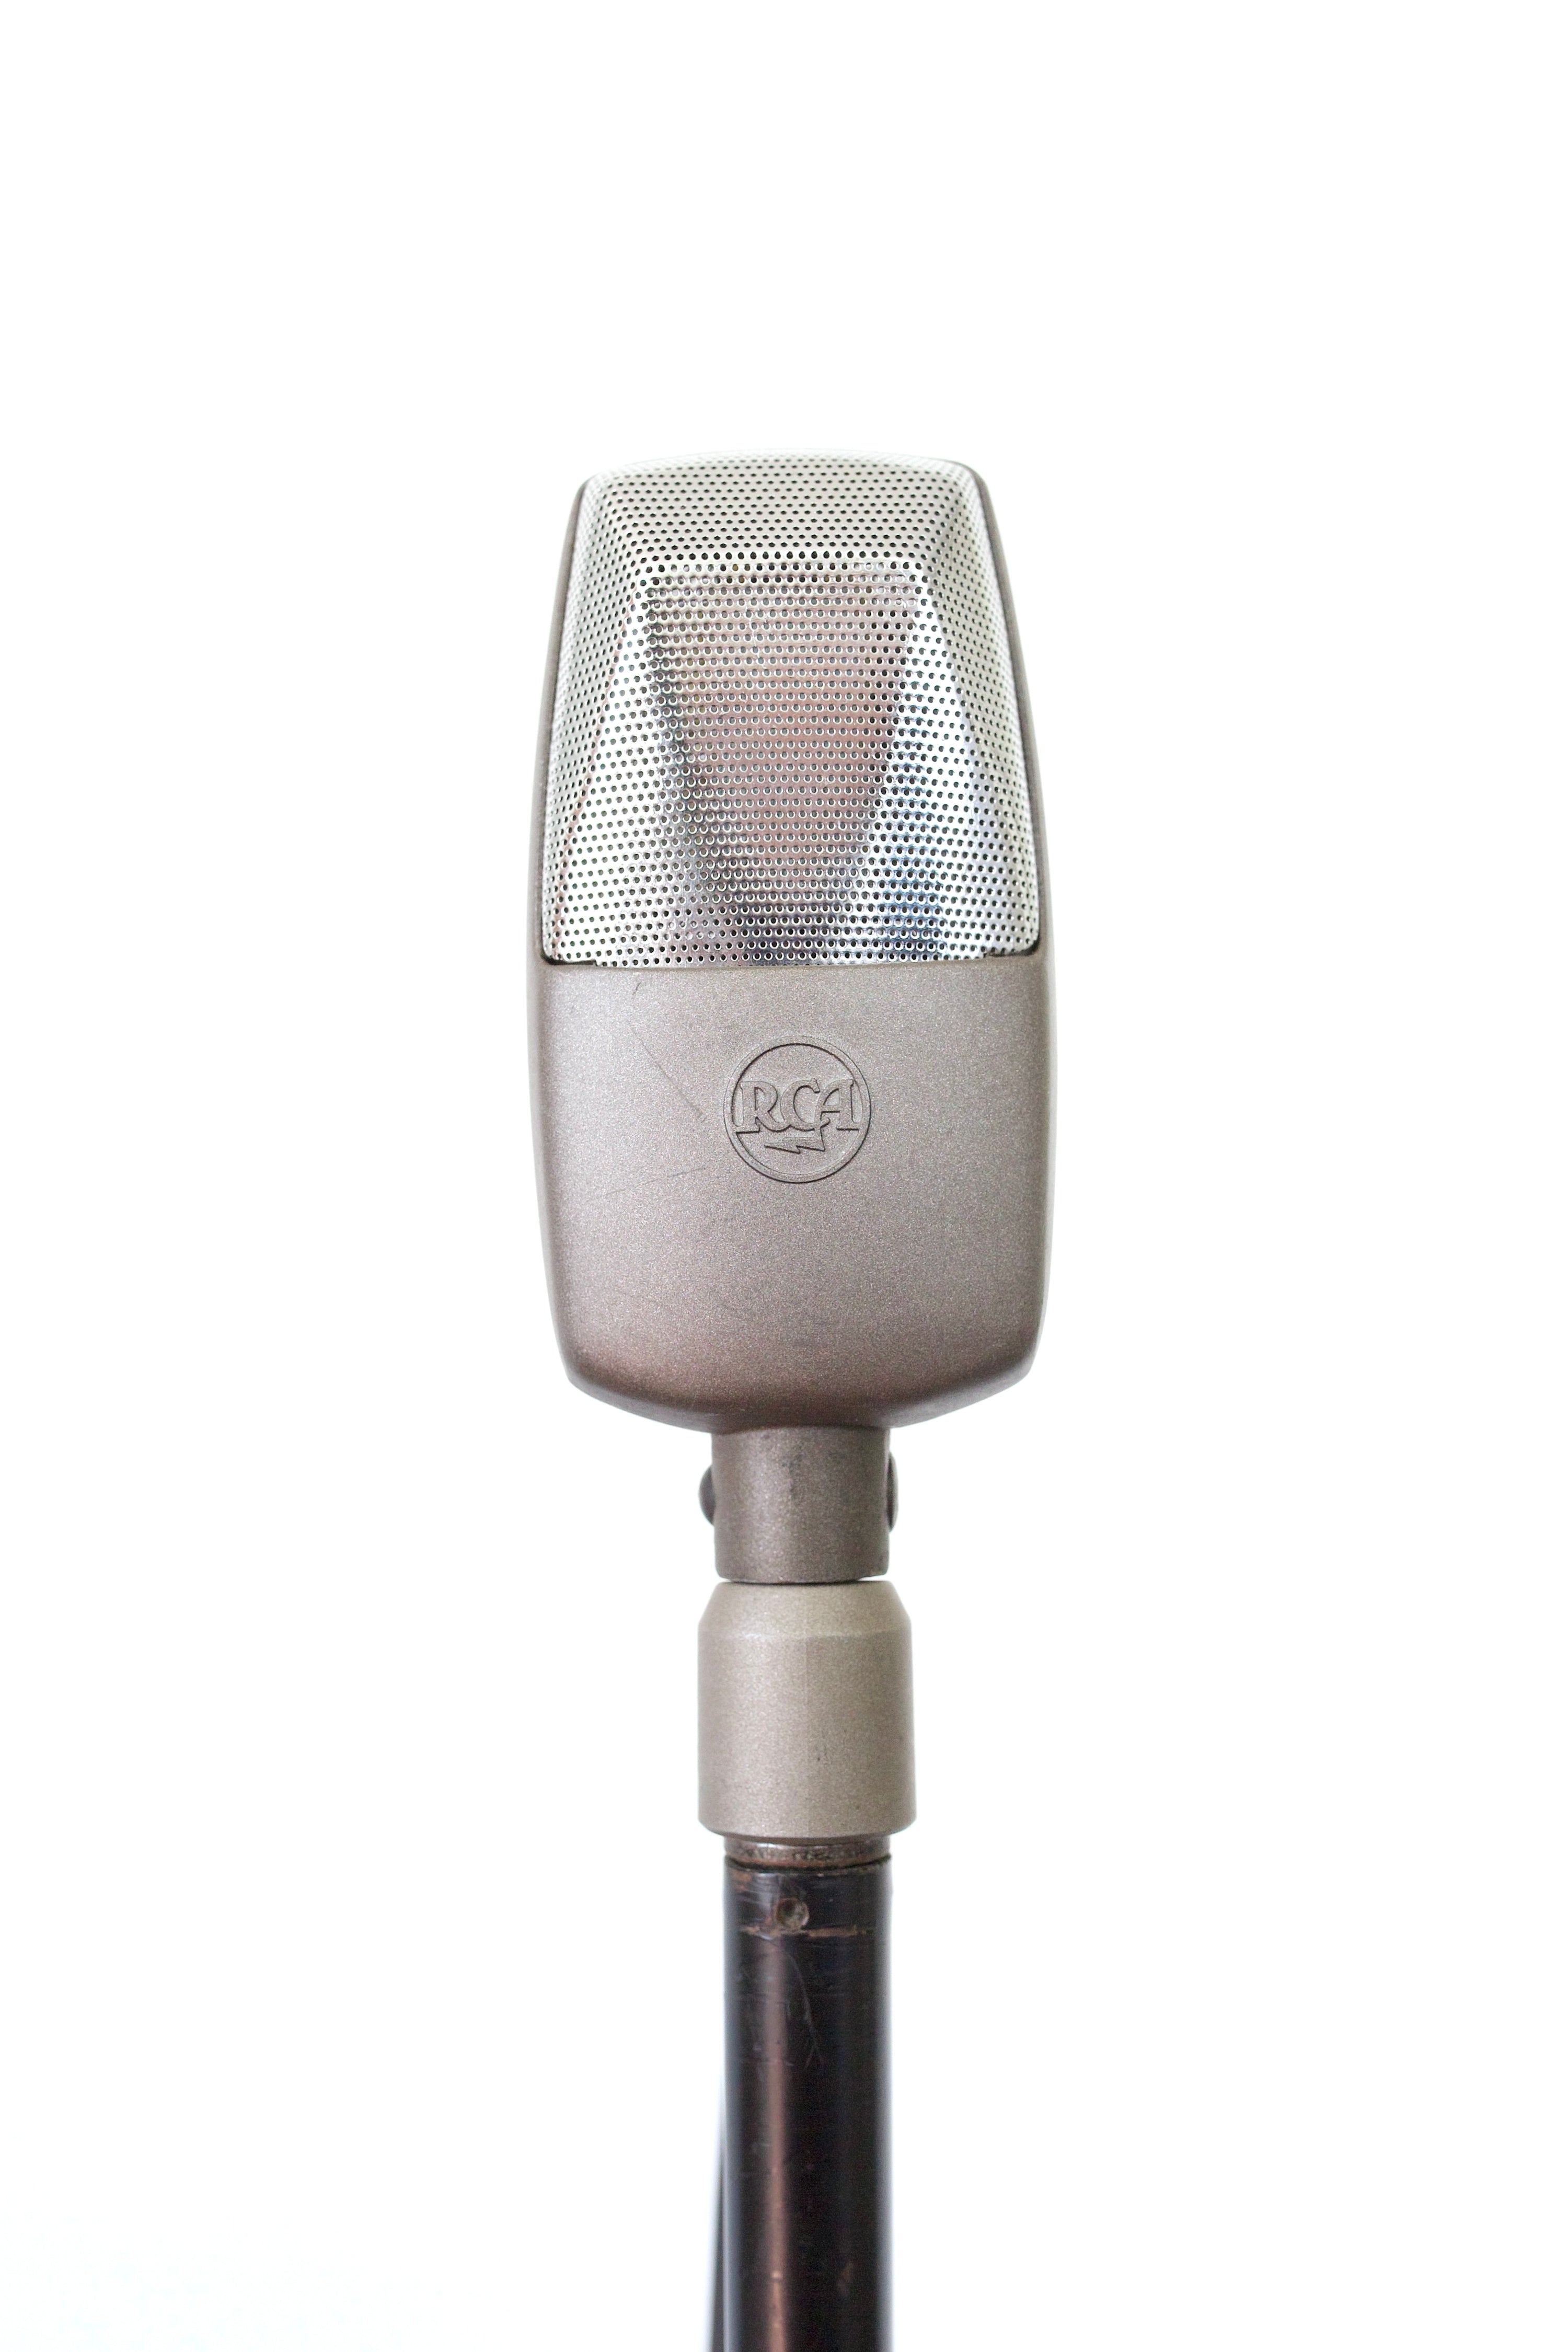 RCA SK-46 Ribbon Microphone